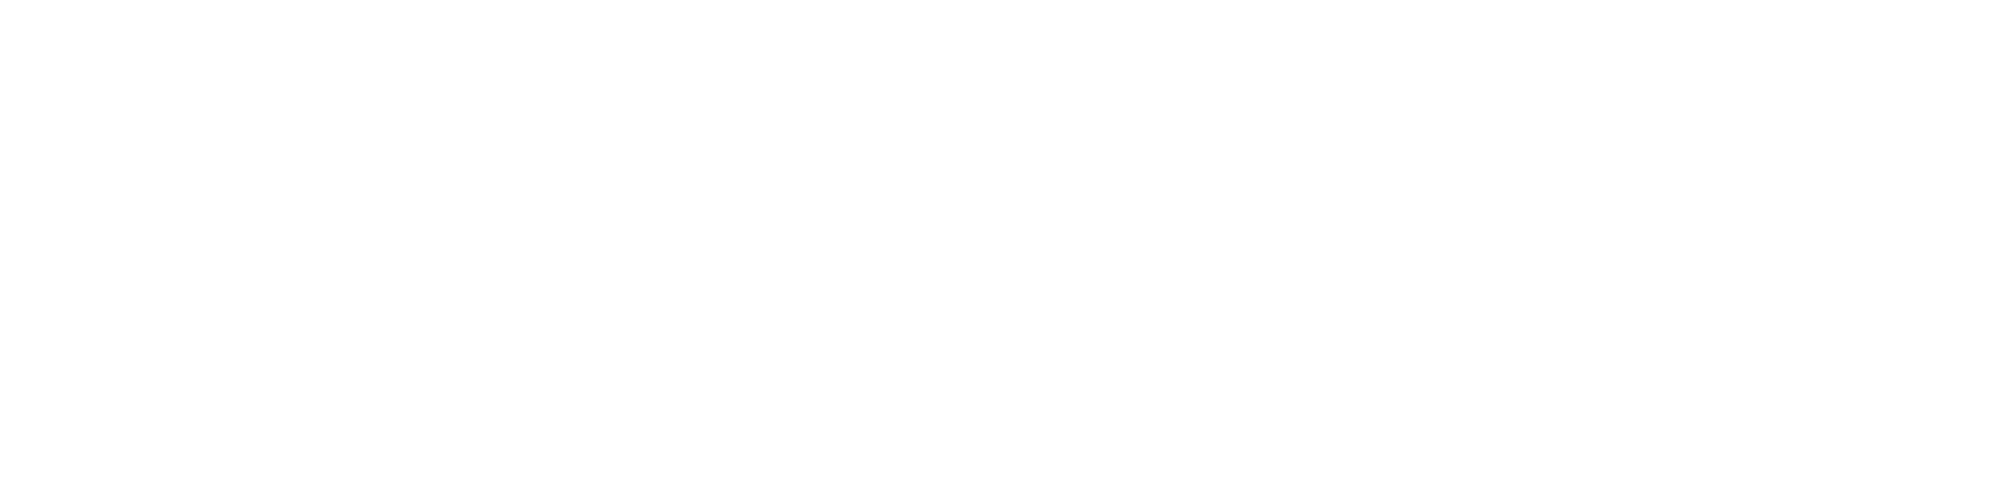 Curensology Magasin de meubles vintage